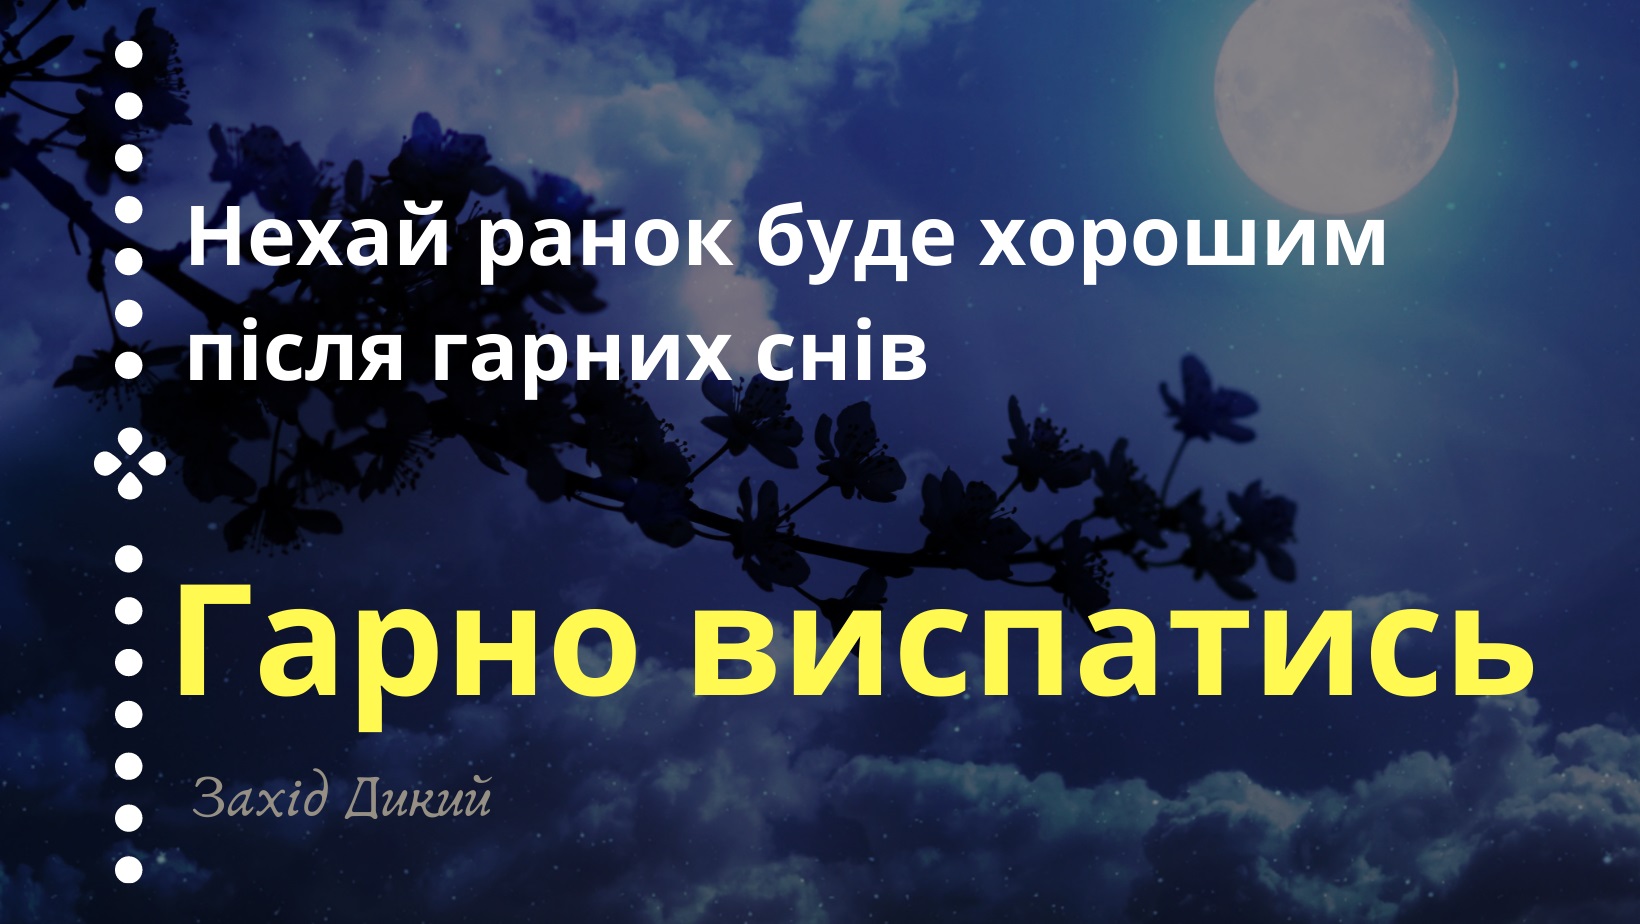 доброй ночи по украински картинки